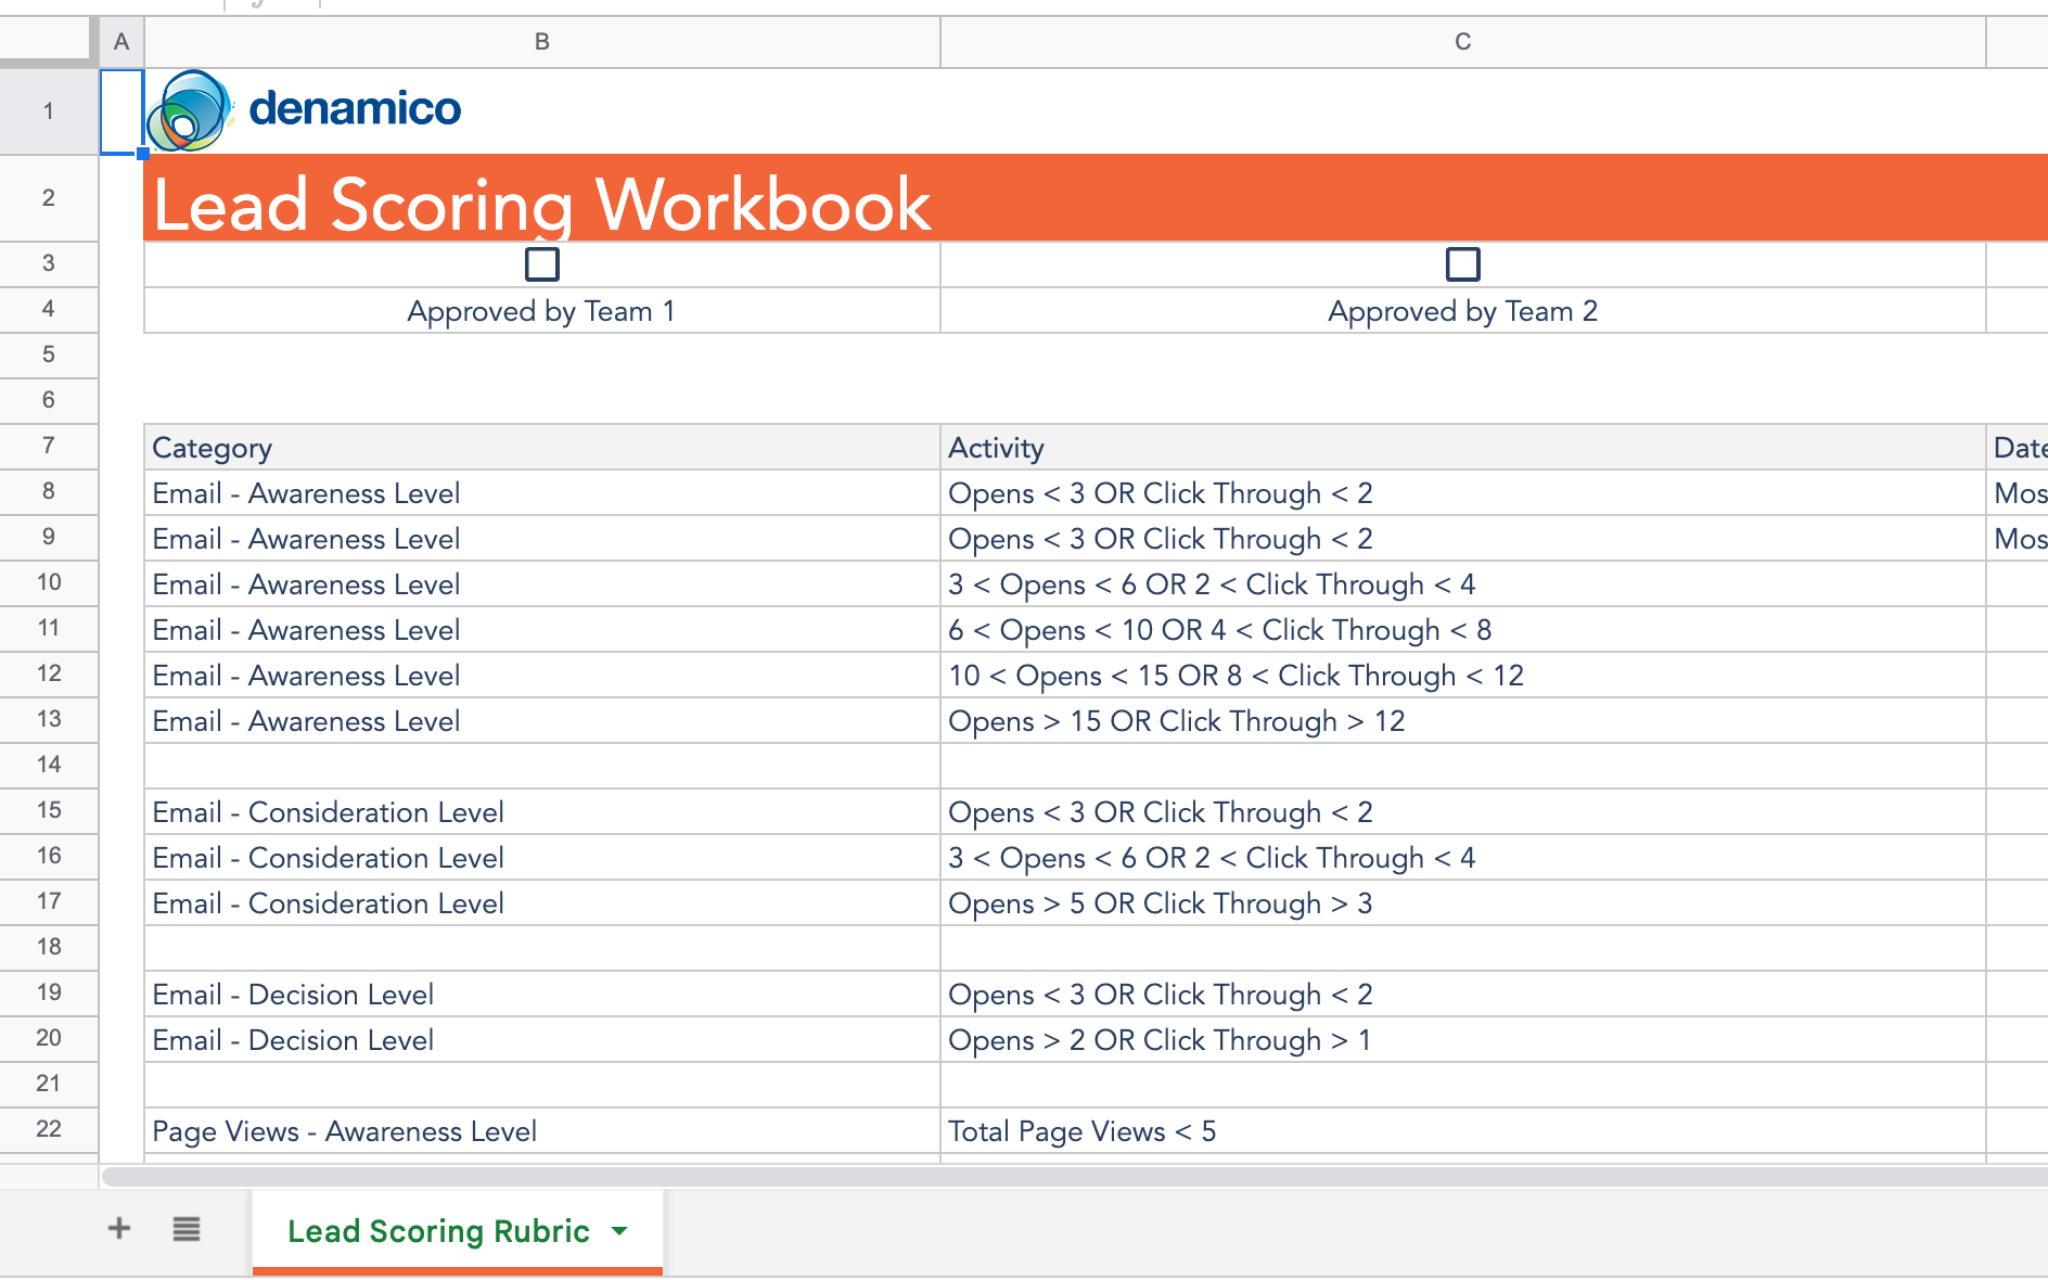 Download the Lead Scoring Workbook